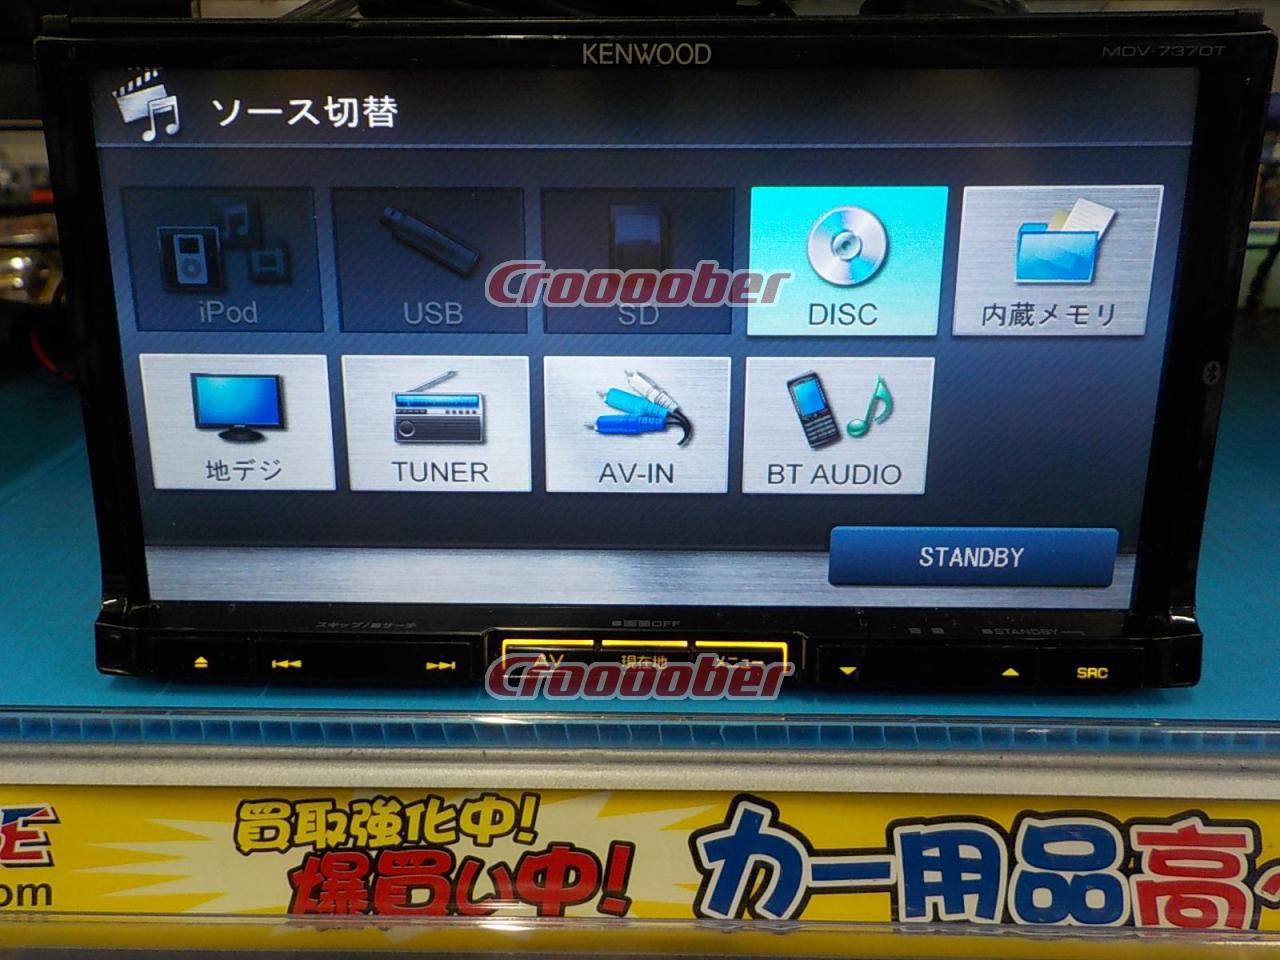 KENWOOD MDV-737DT ☆Bluetooth内蔵!USB接続可!☆ | カーナビ(地デジ ...